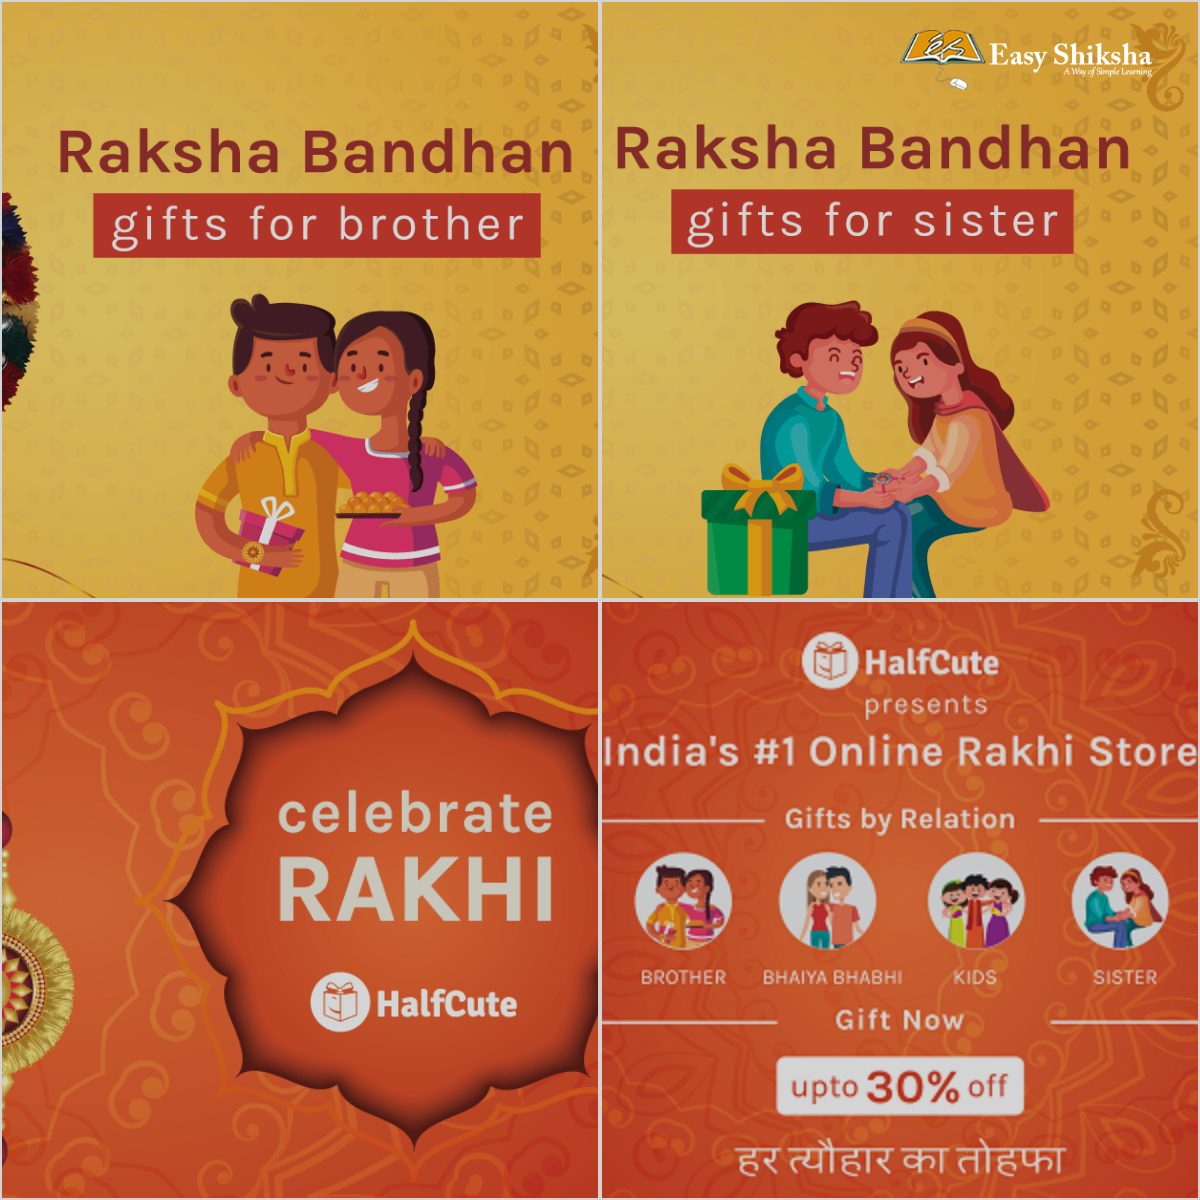 Unique Rakhi GIft Ideas for Brother Online Greeting Card by Raksha Bandha